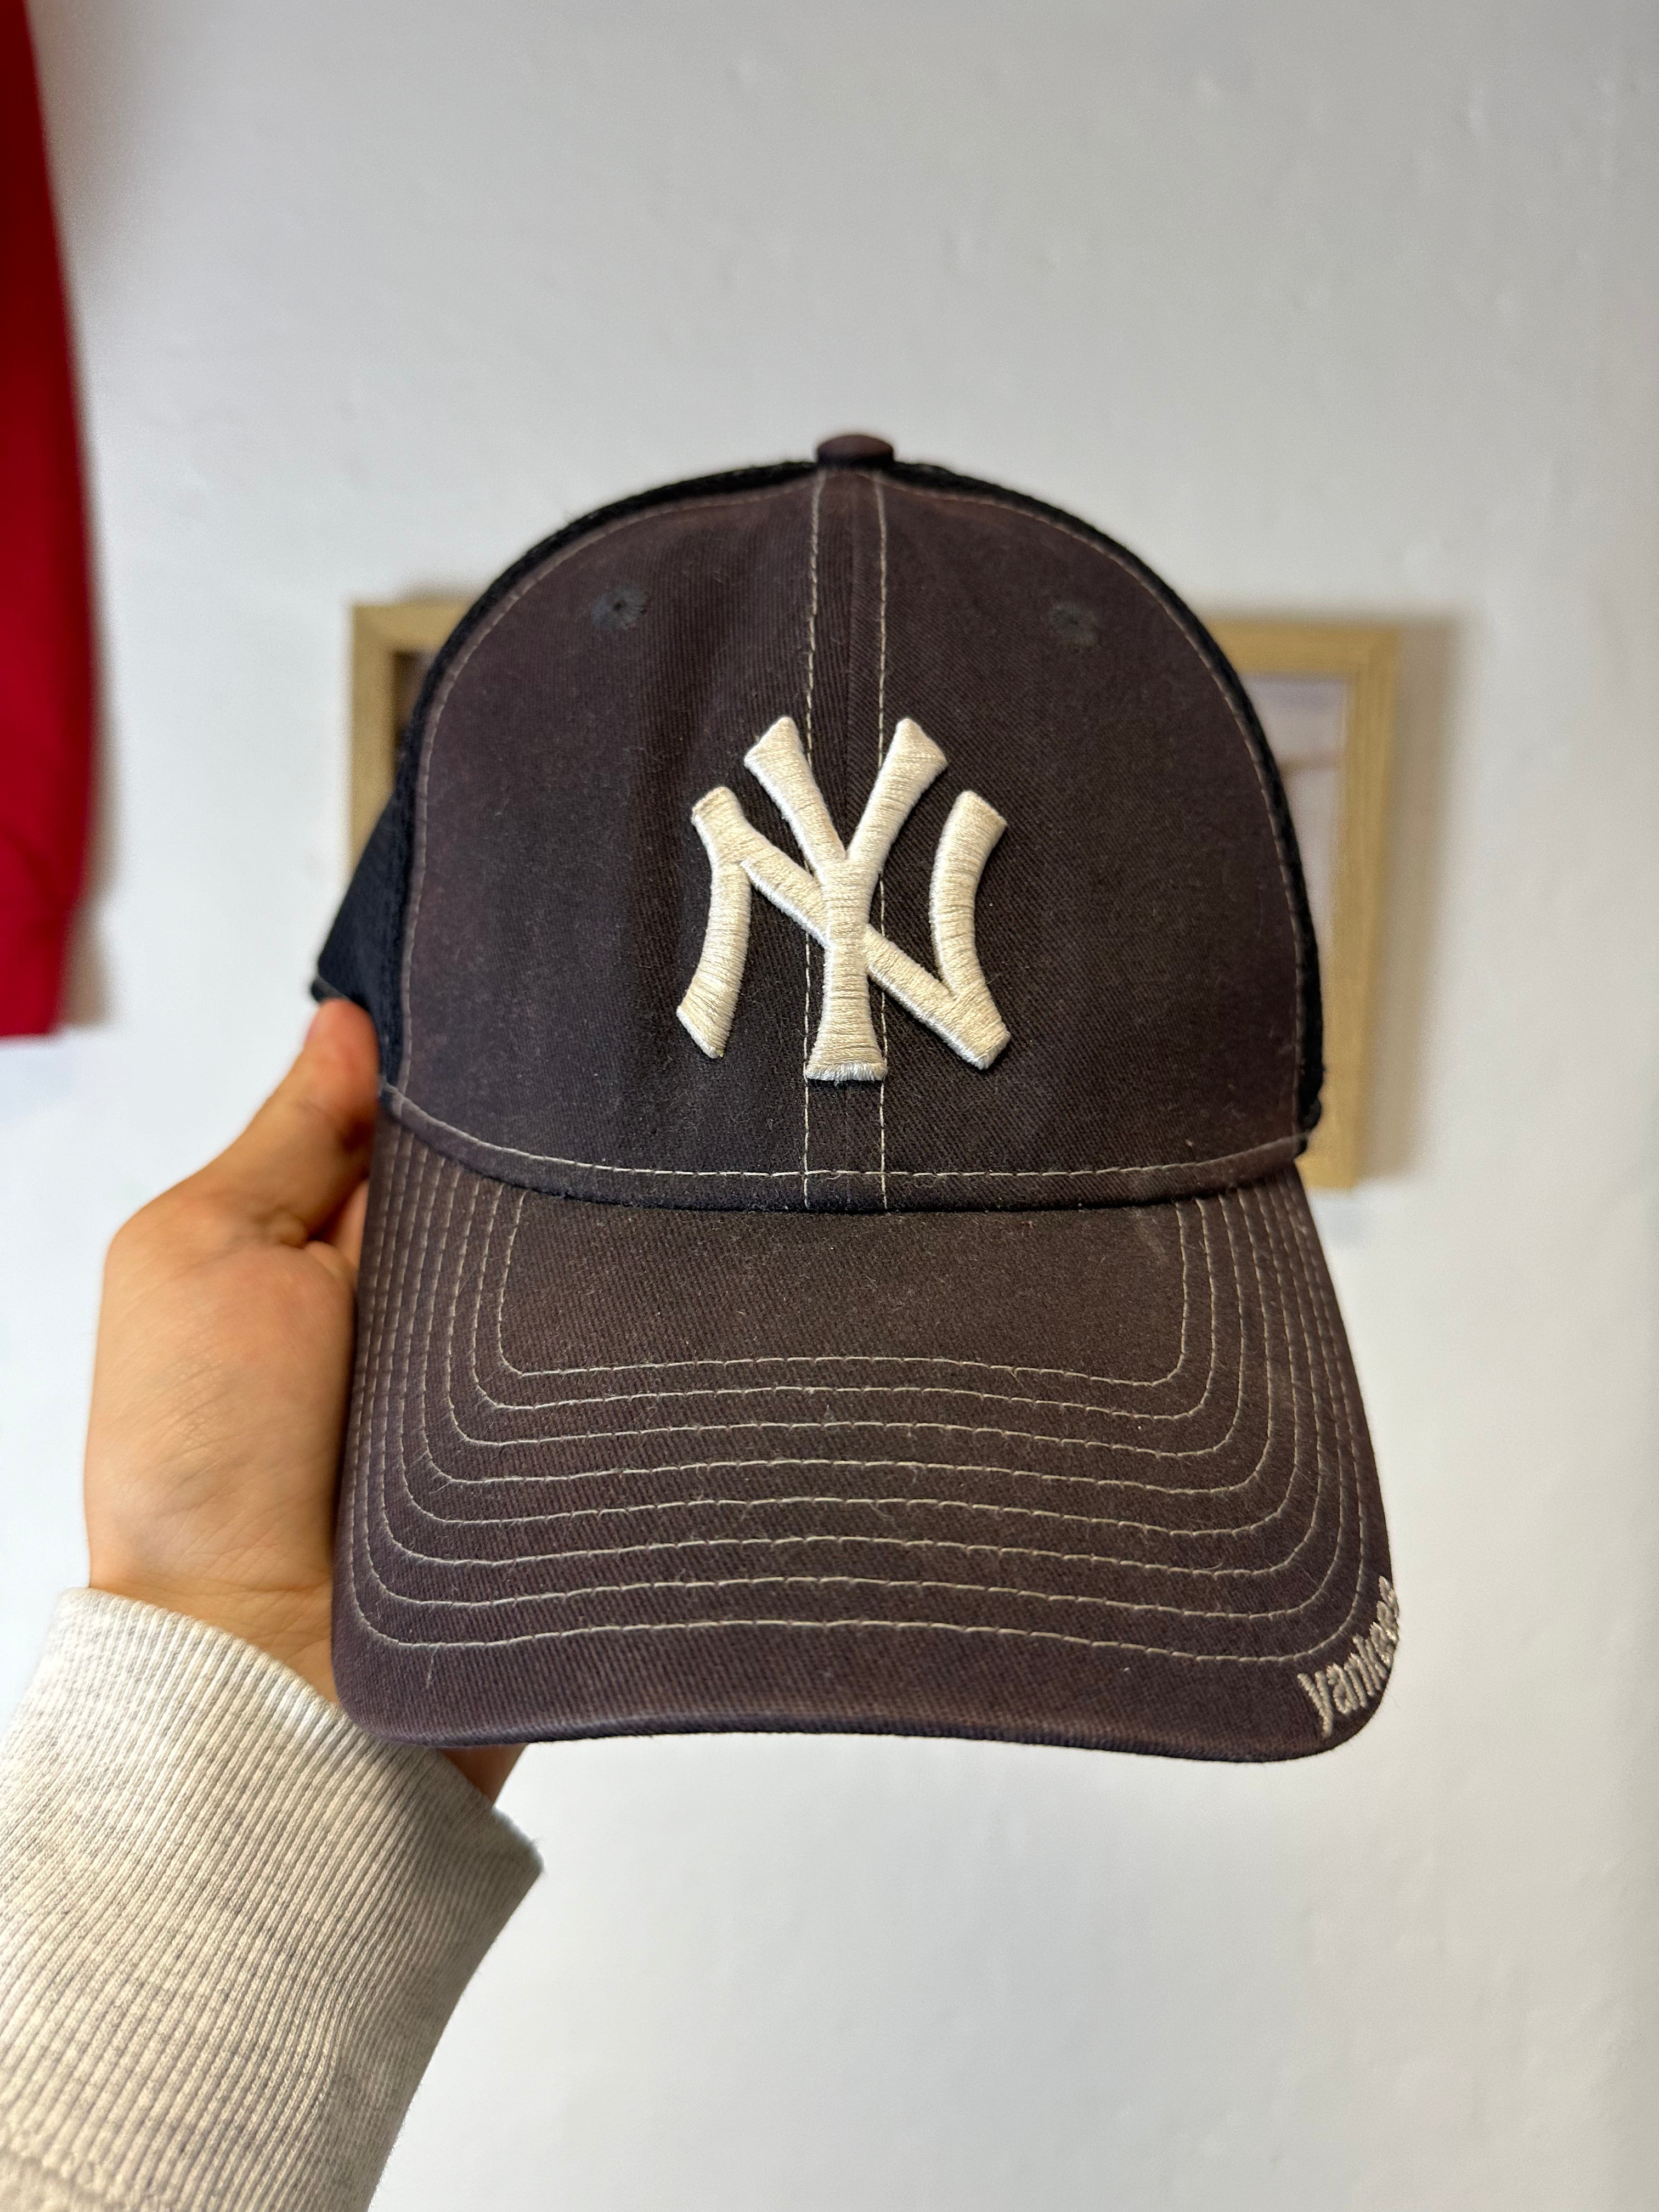 Vintage Yankees Sun Faded Cap